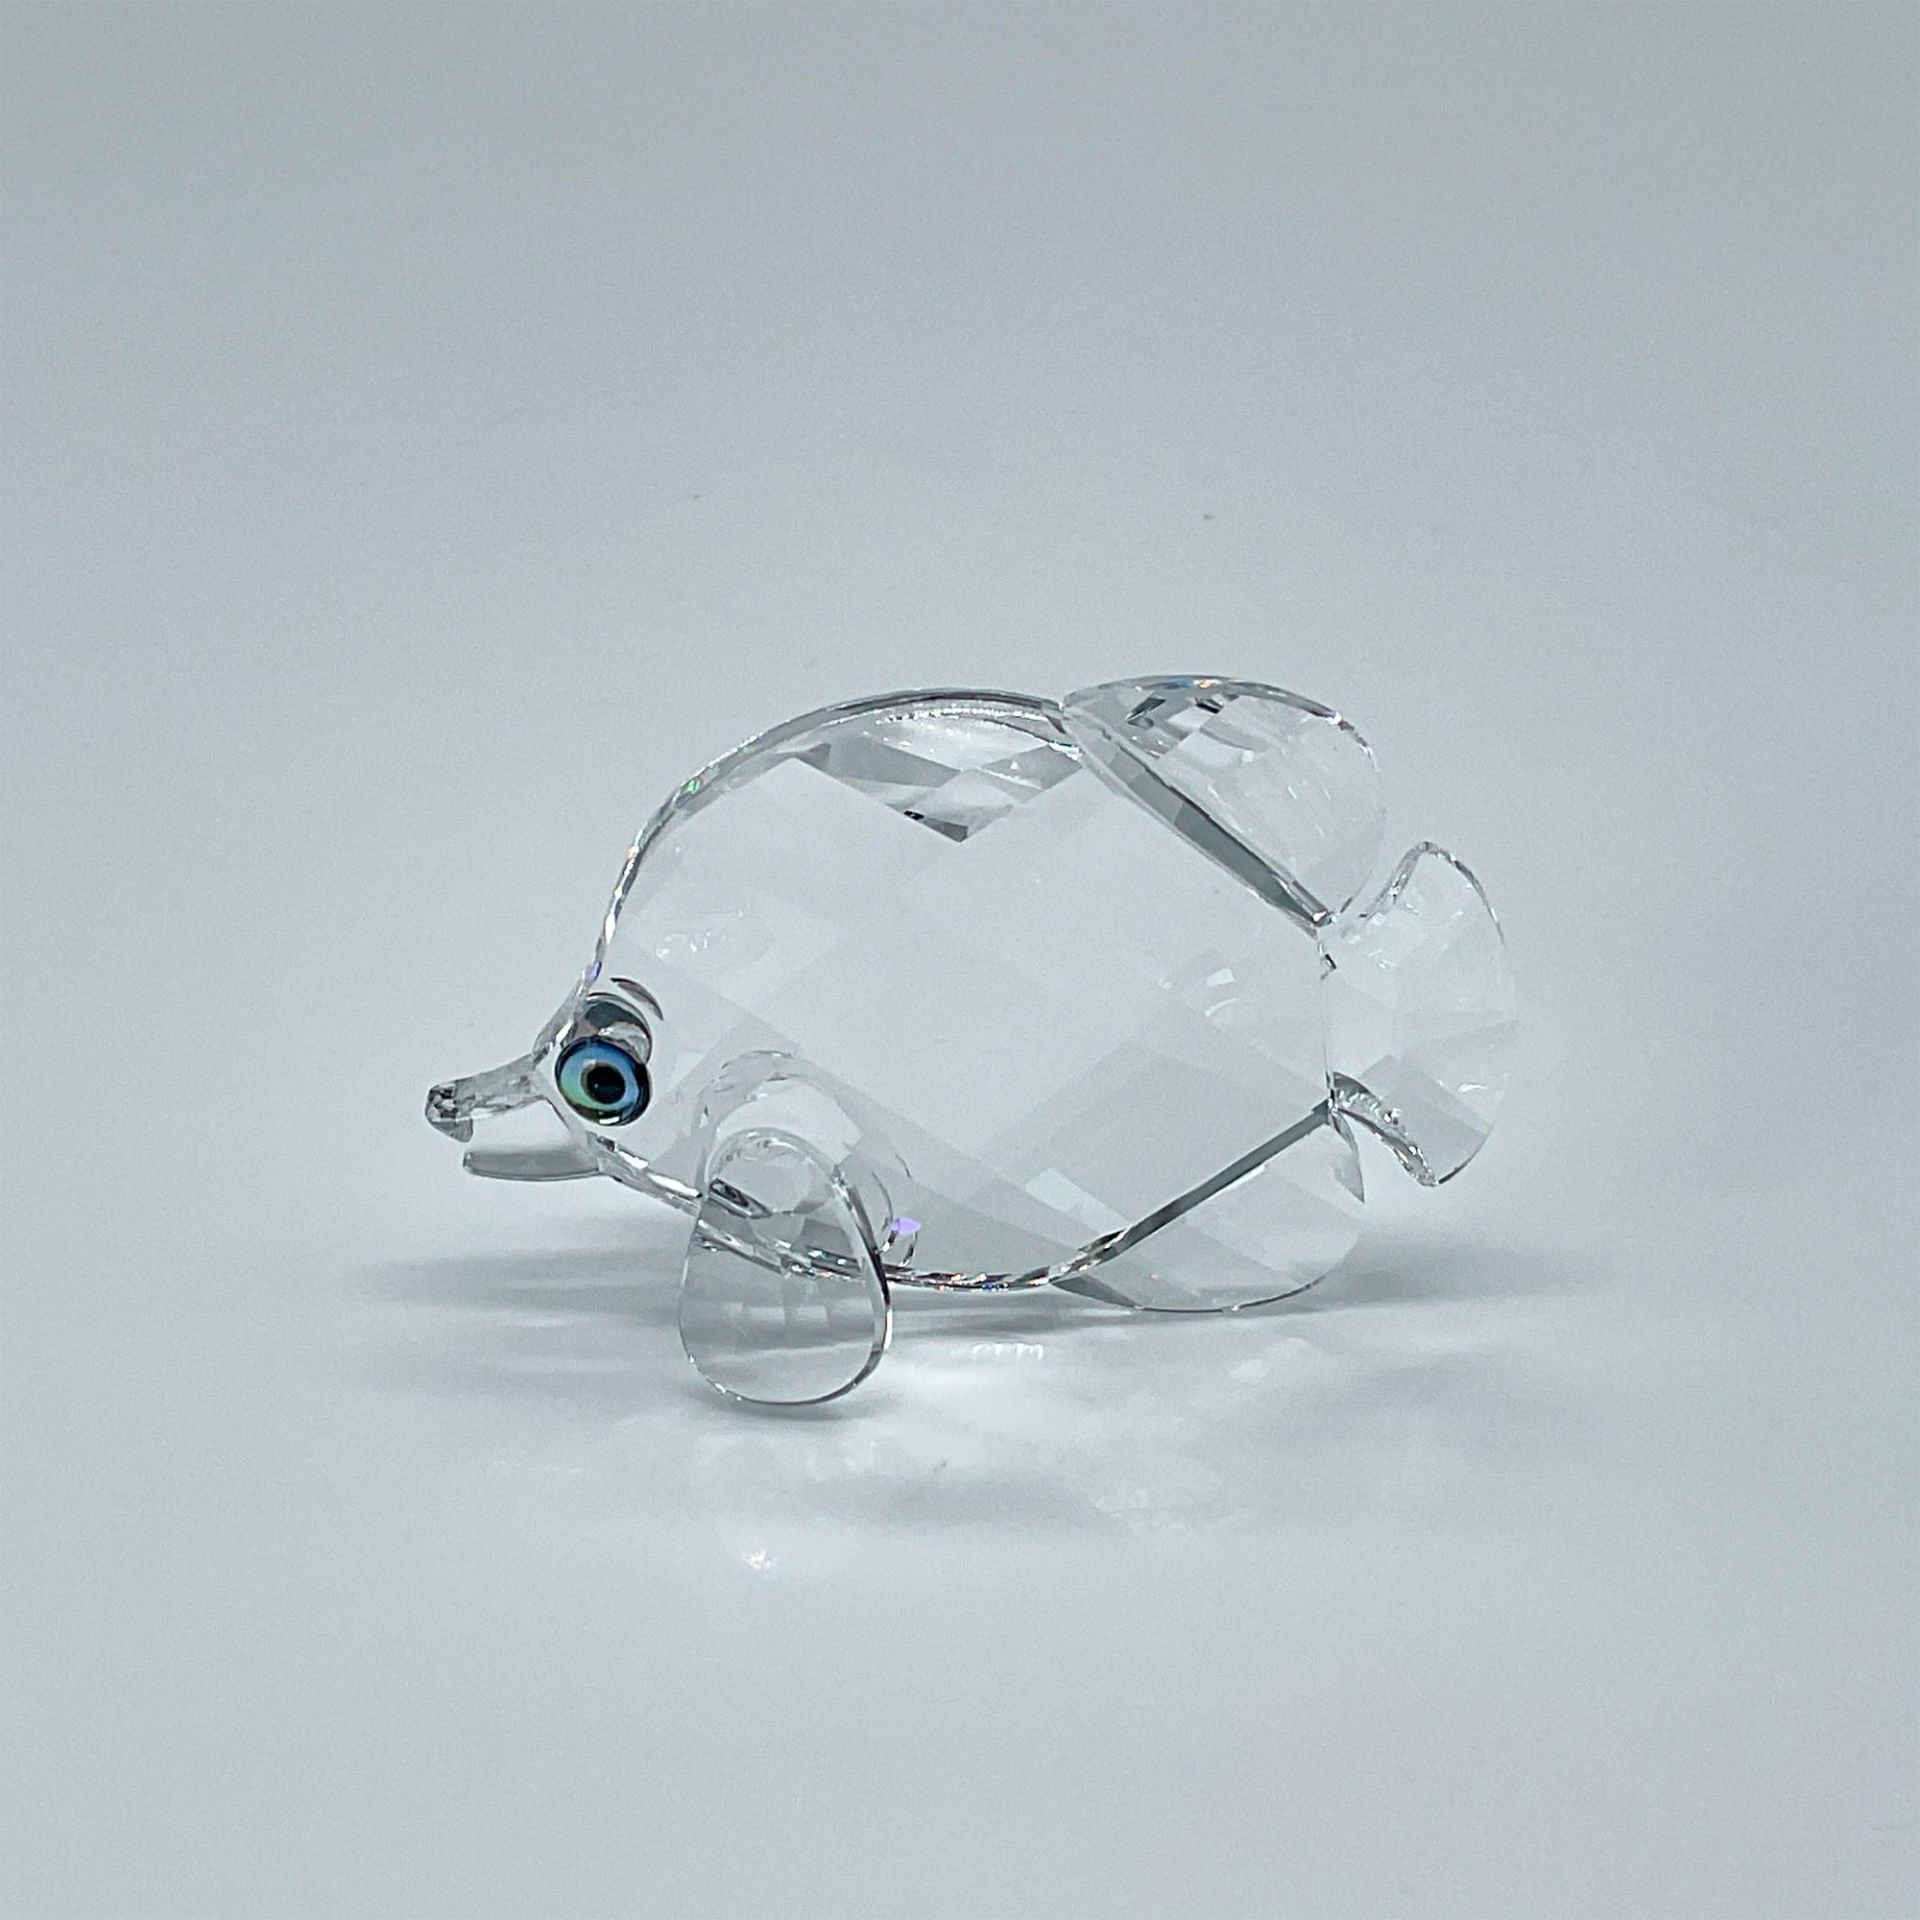 Swarovski Crystal Figurine, Small Butterfly Fish